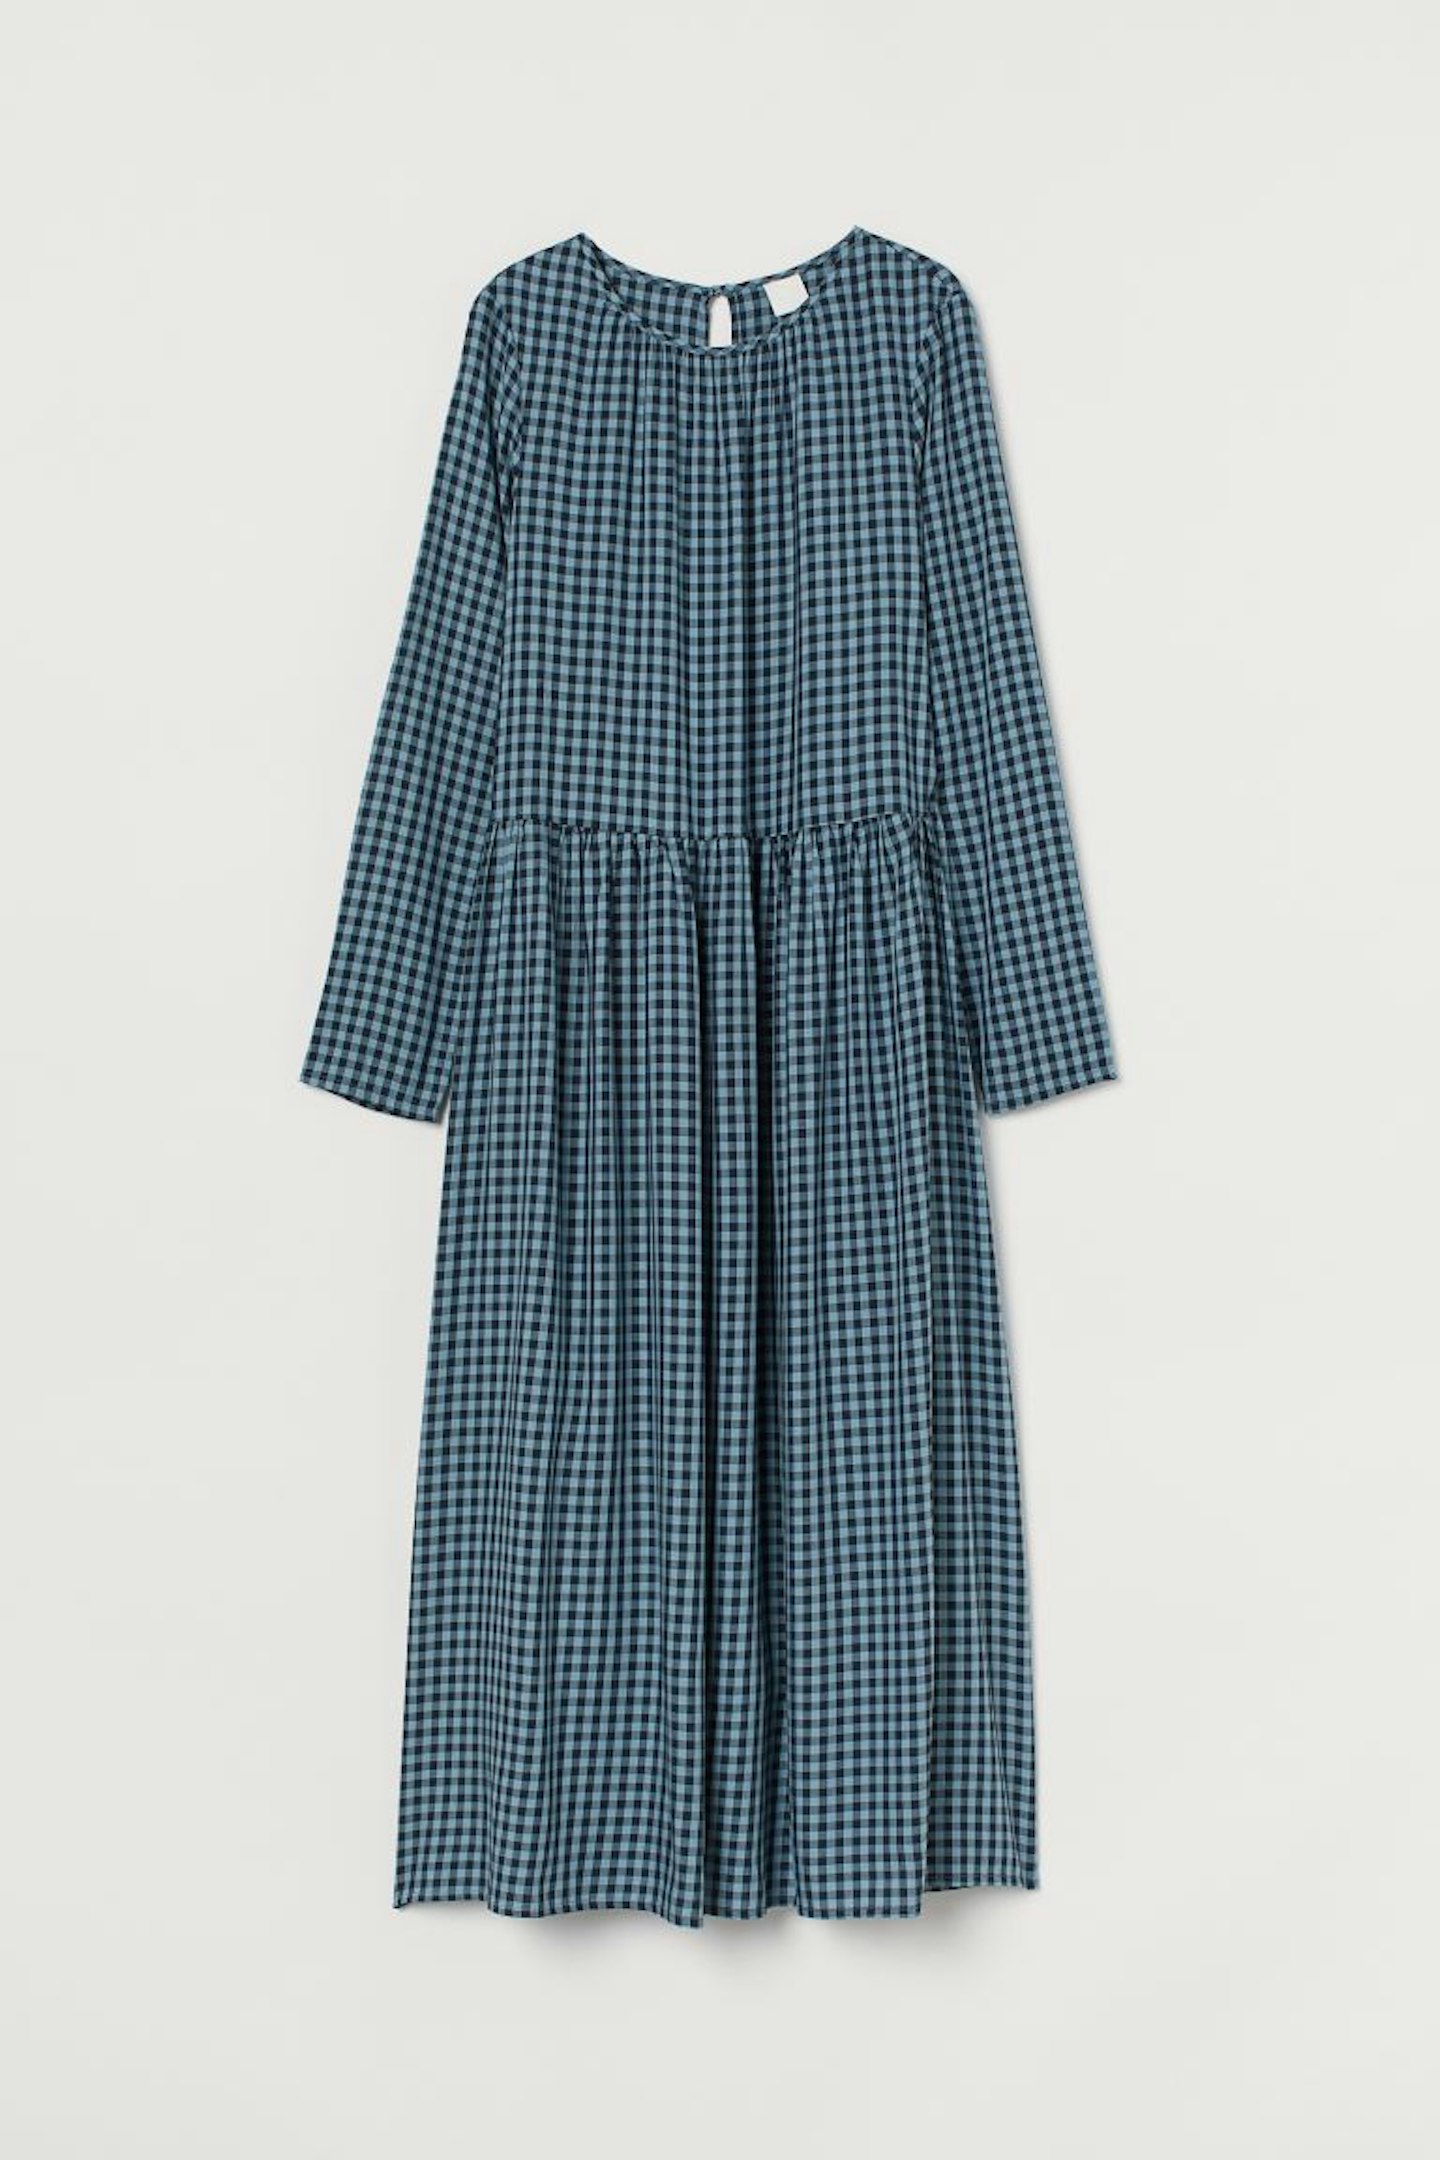 H&M, Checked Dress, £19.99